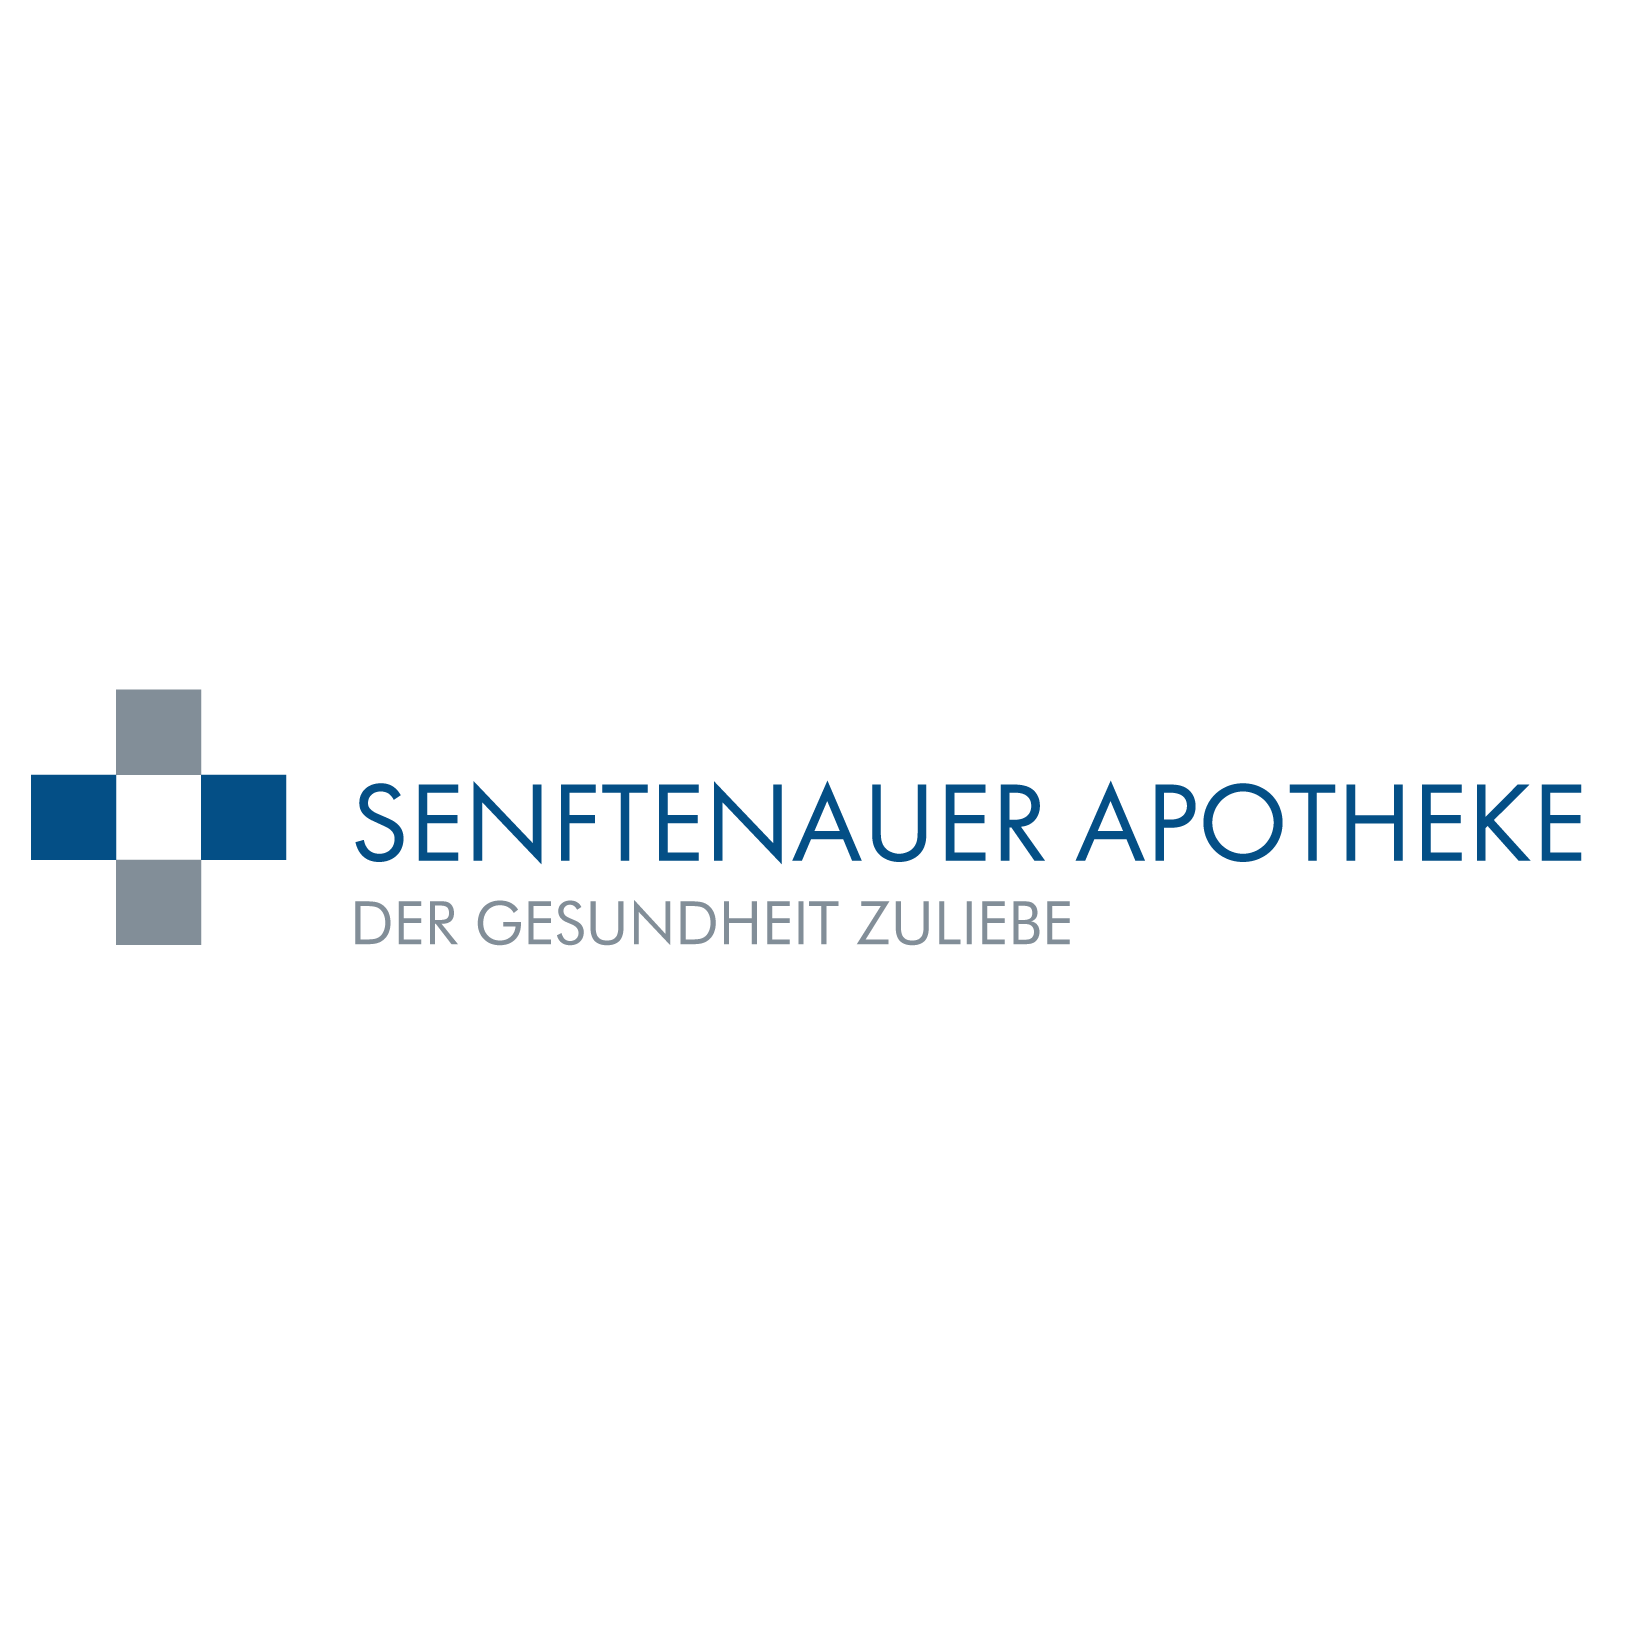 Senftenauer Apotheke in München - Logo